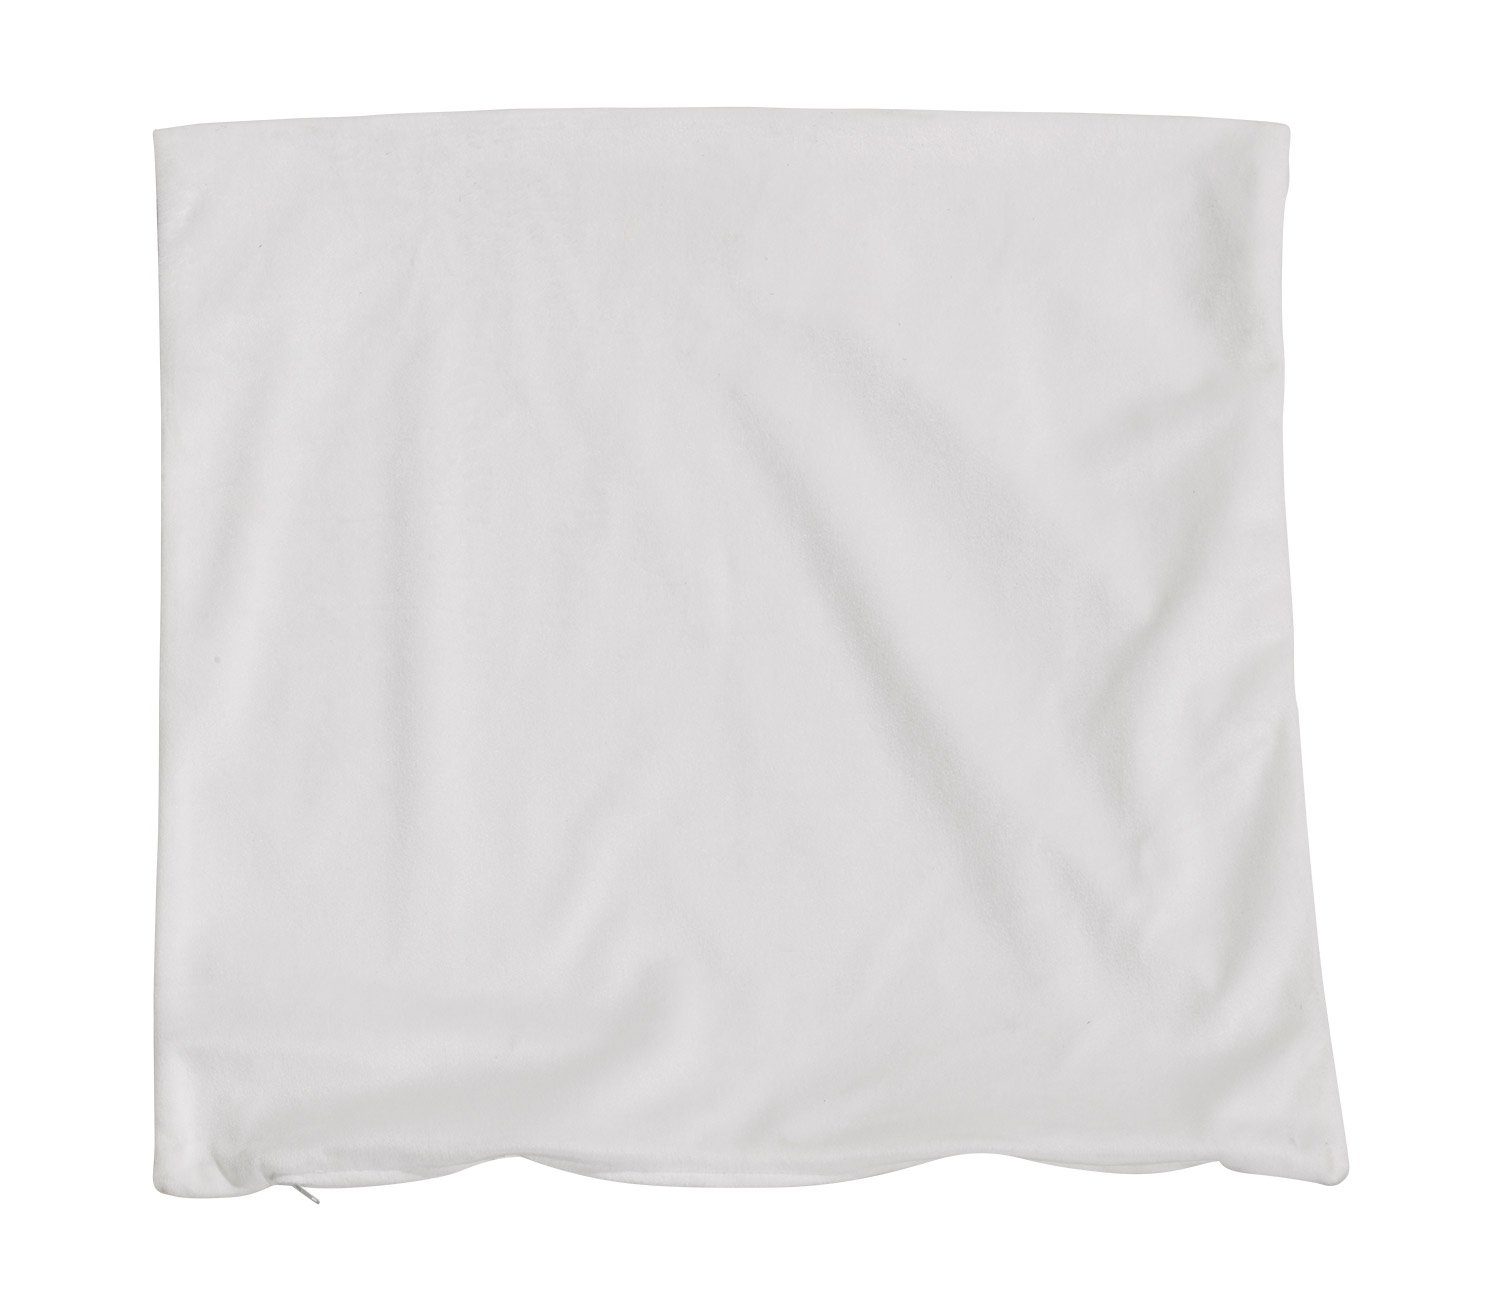 Kissenhülle Stück) x Kunstfaser, Weiß, Garden ESTELLE, (1 50 Sun 50 cm, Unifarben,